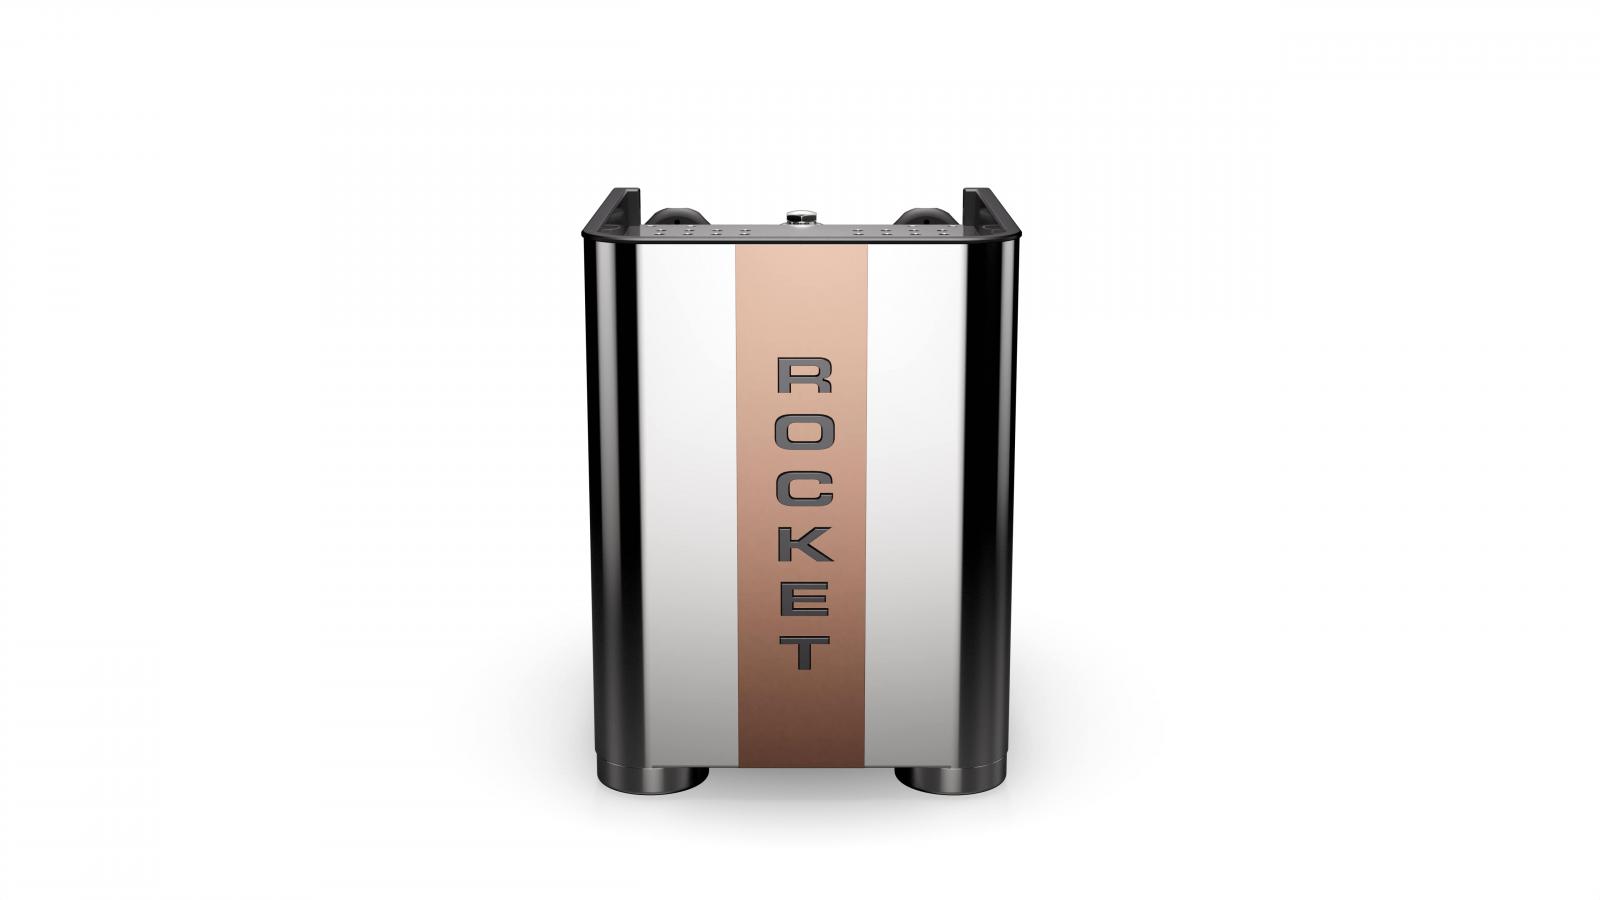 Rocket Appartamento Nera Machine à espresso en cuivre